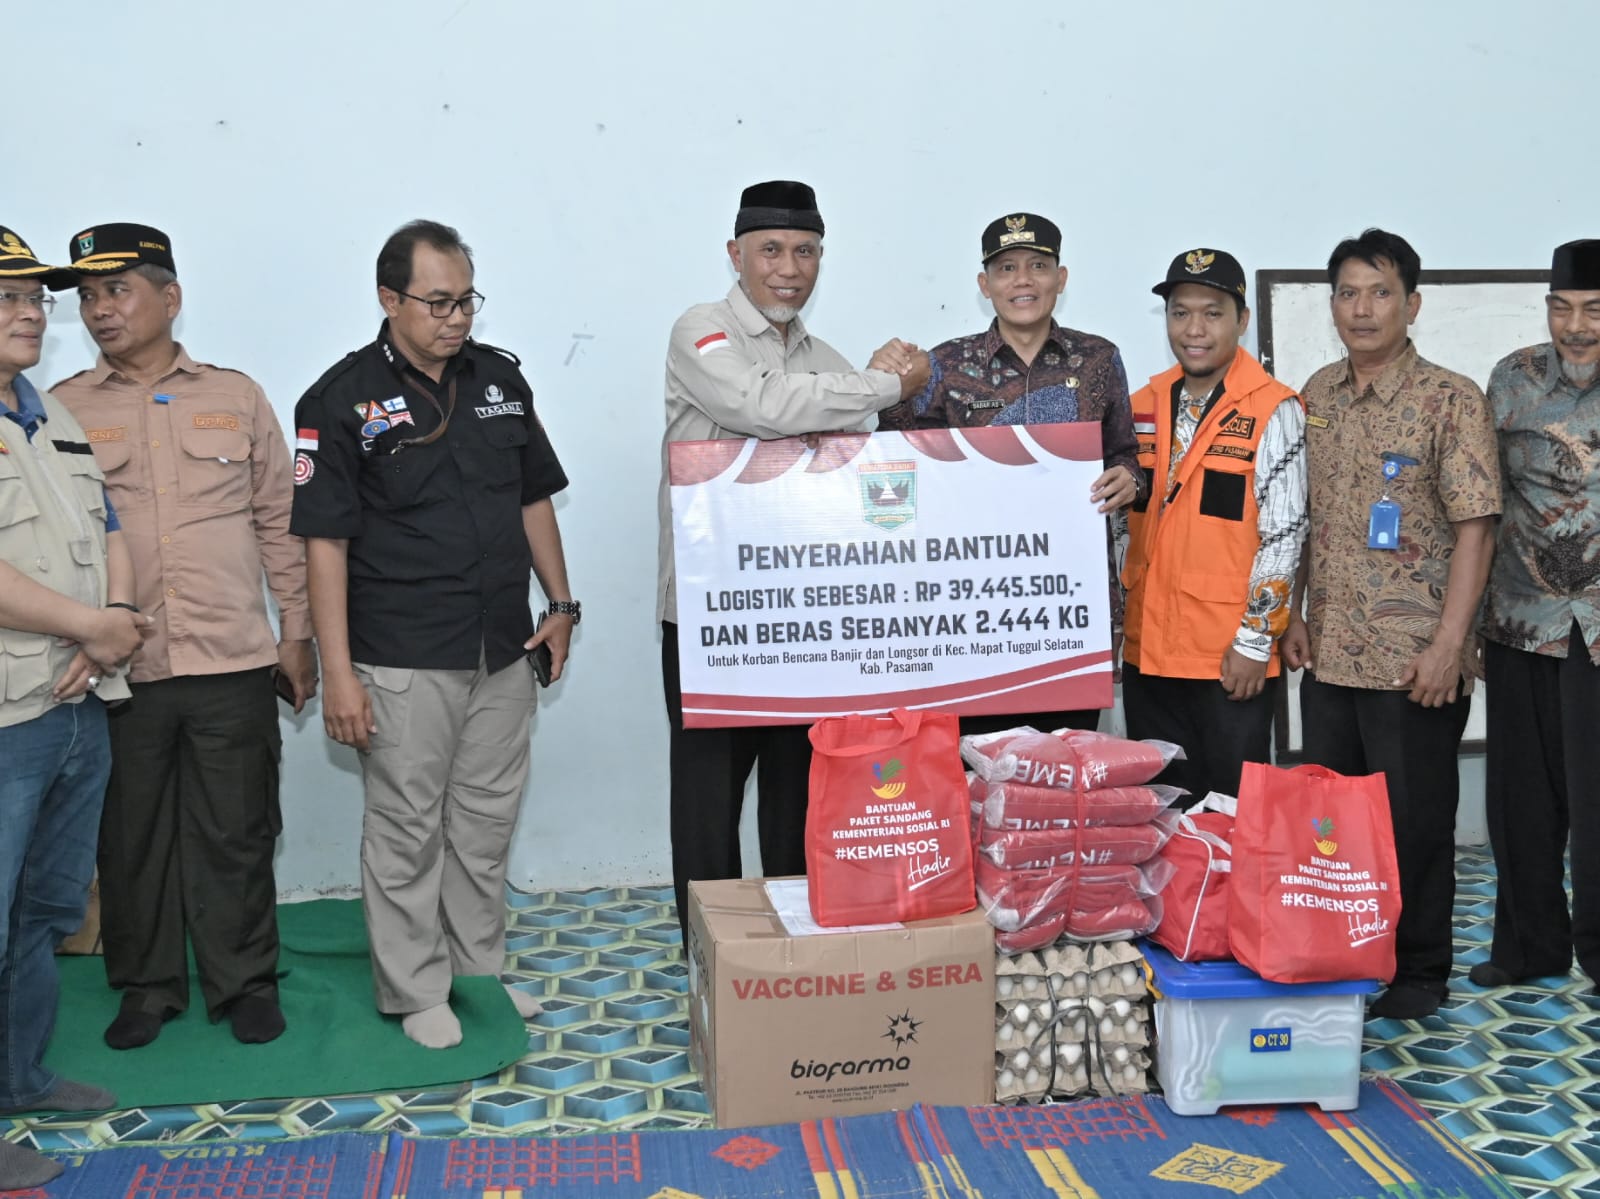 Gubernur Sumatera Barat Mahyeldi, menyerahkan bantuan logistik bagi warga Kecamatan Mapat Tunggul Selatan, Kabupaten Pasaman. Foto Adpsb.